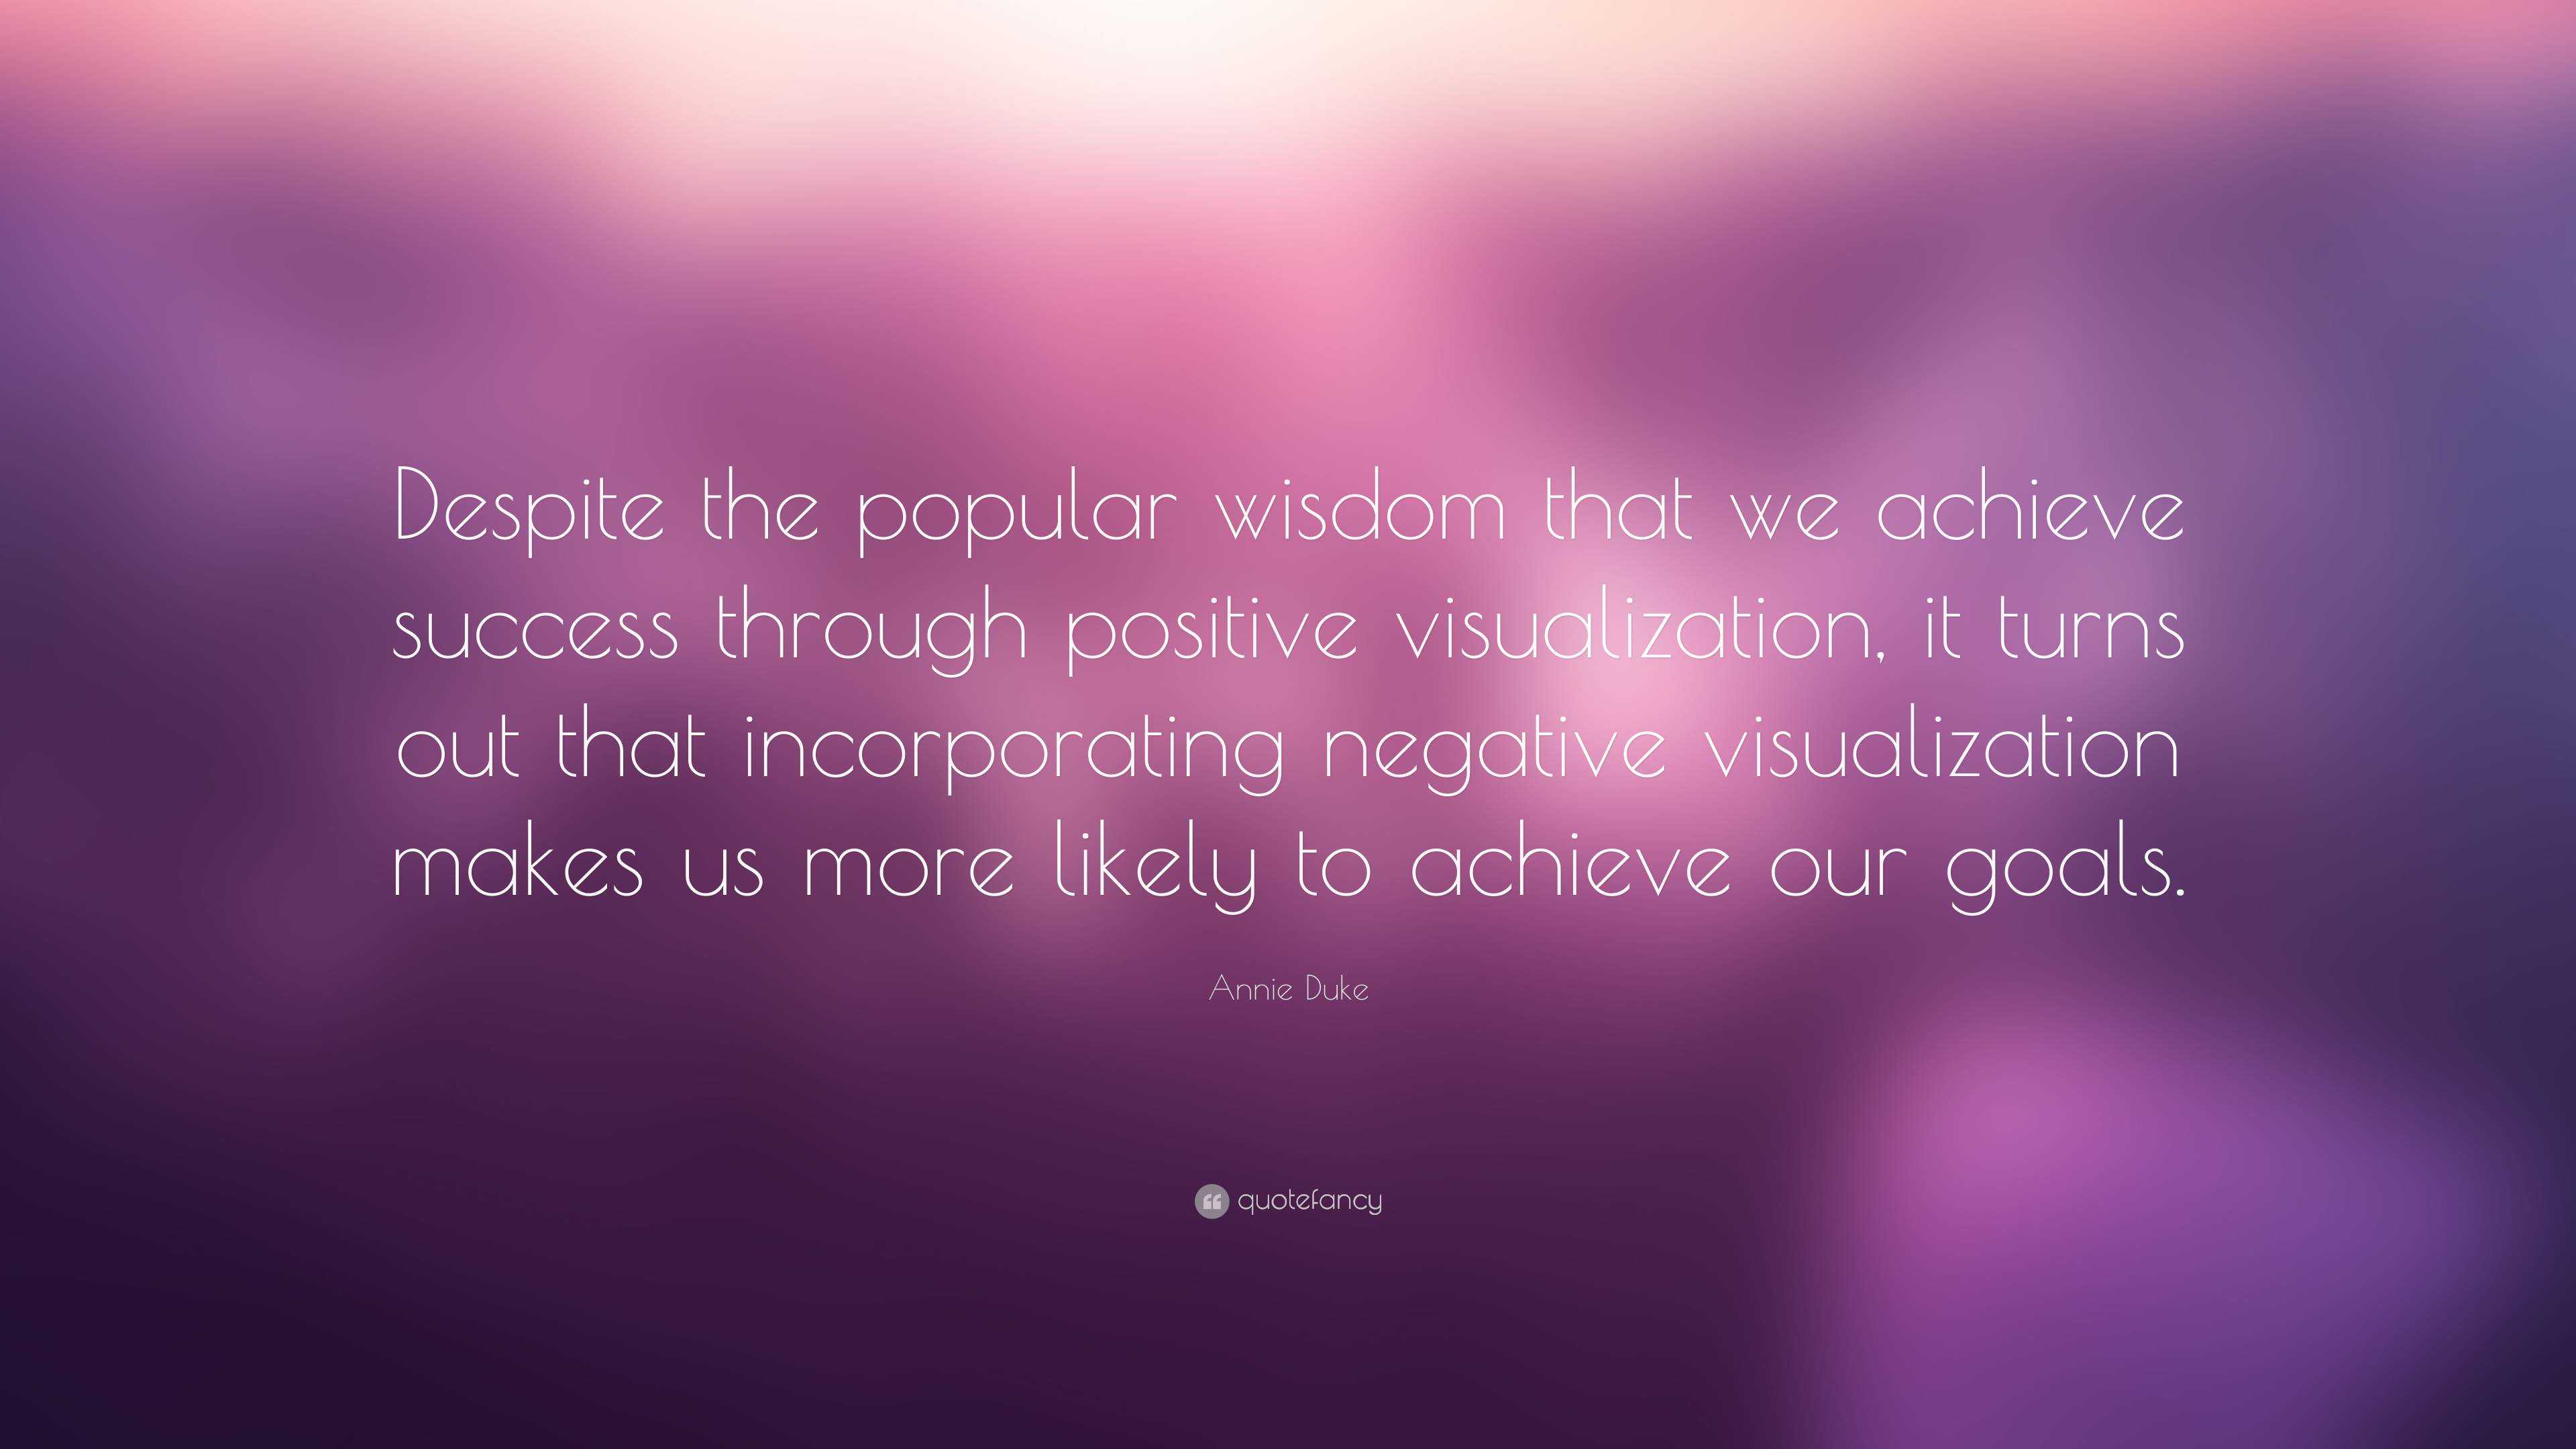 Annie Duke Quote: “Despite the popular wisdom that we achieve success ...